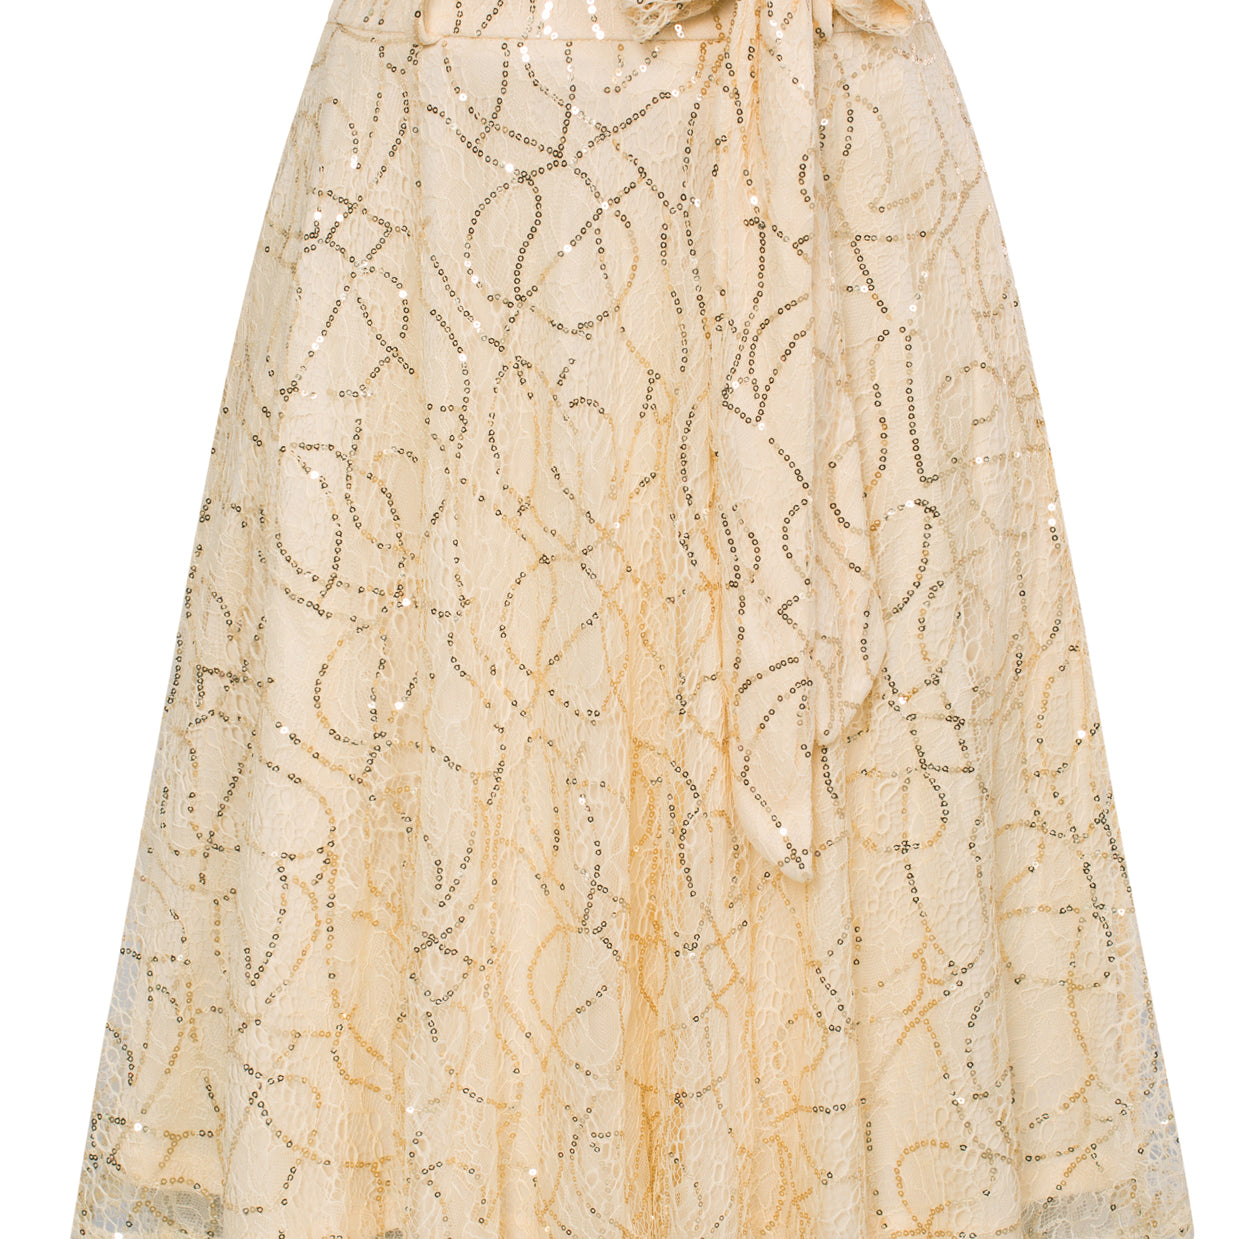 Vintage Lace Swing Skirt High Waist Knee Length Flared A-Line Skirt